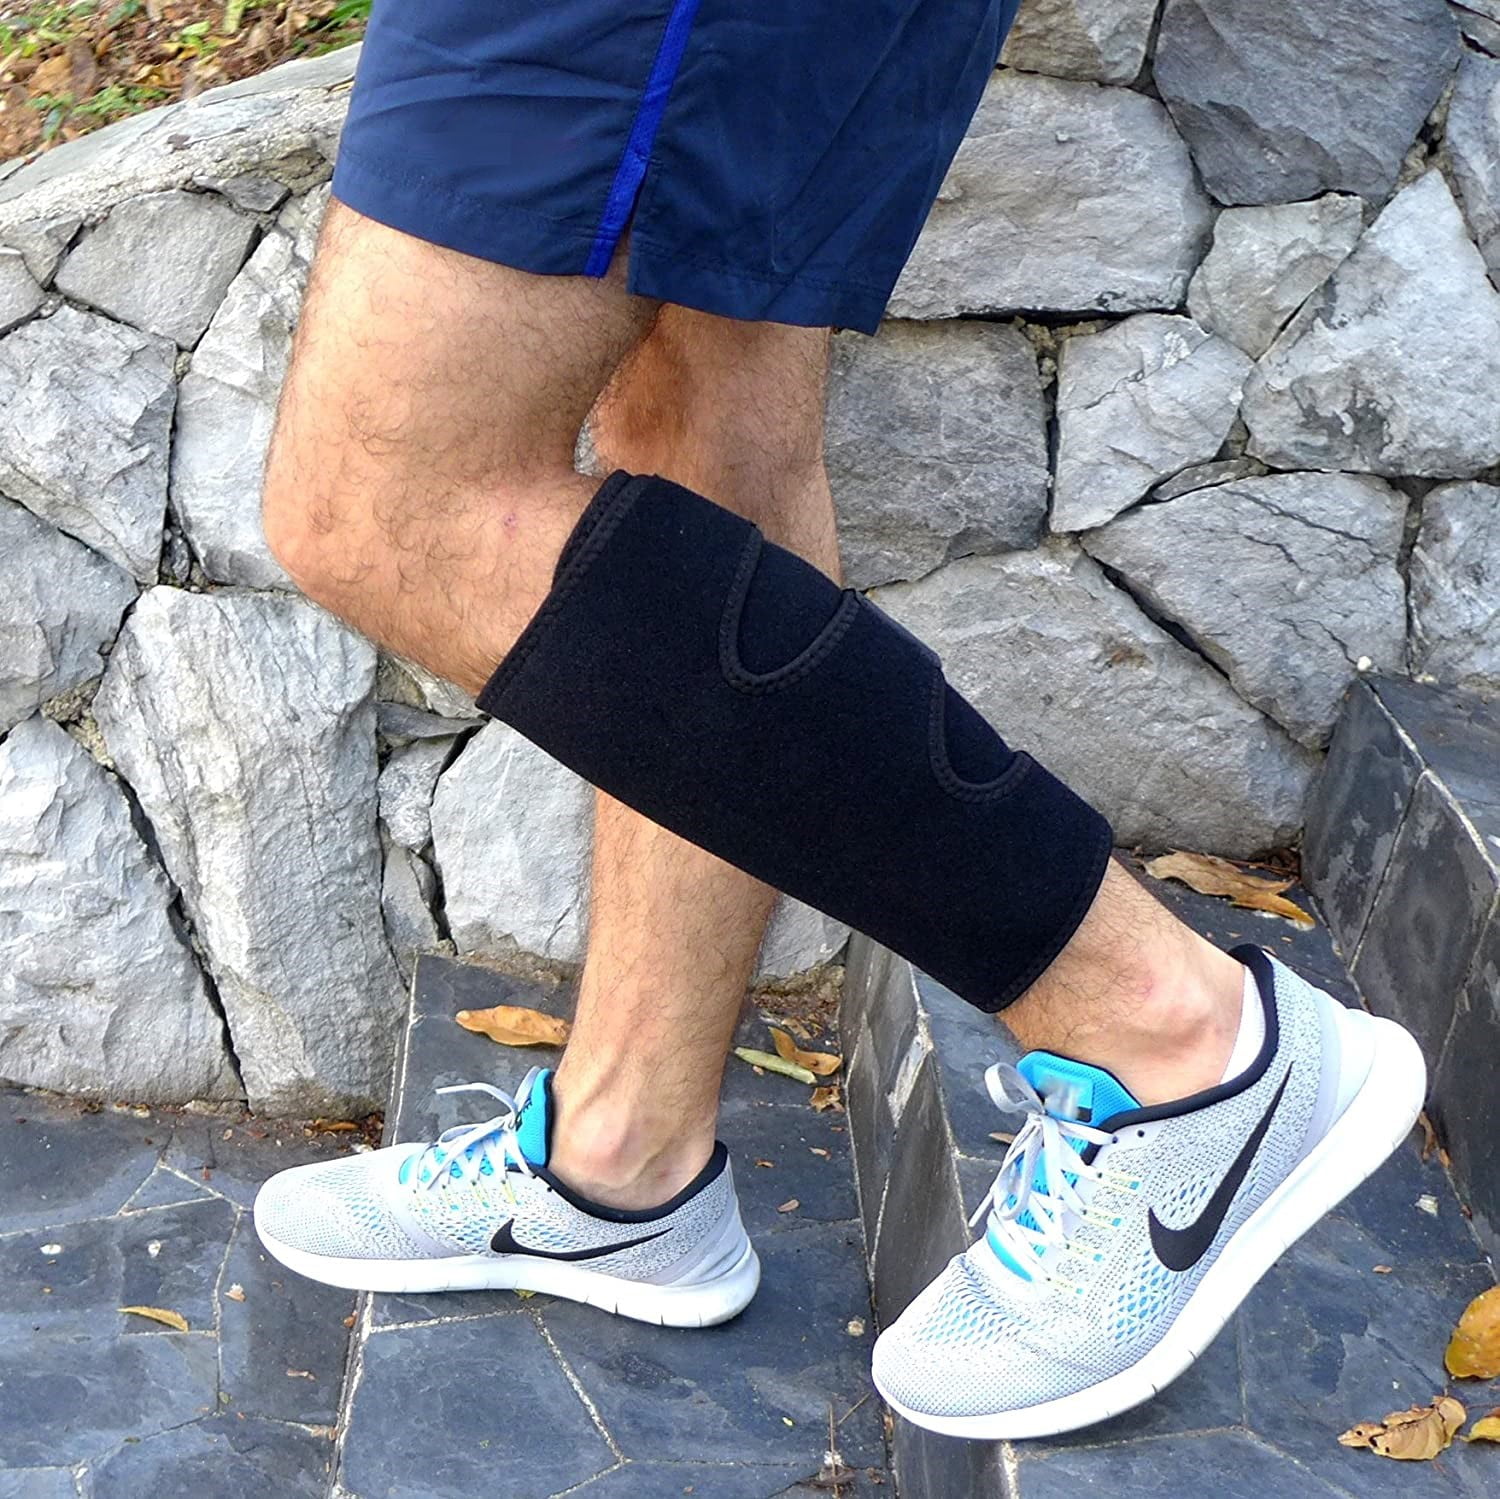 Calf Compression Leg Sleeves - Football Leg Sleeves for Adult Athletes -  Shin Splint Support 